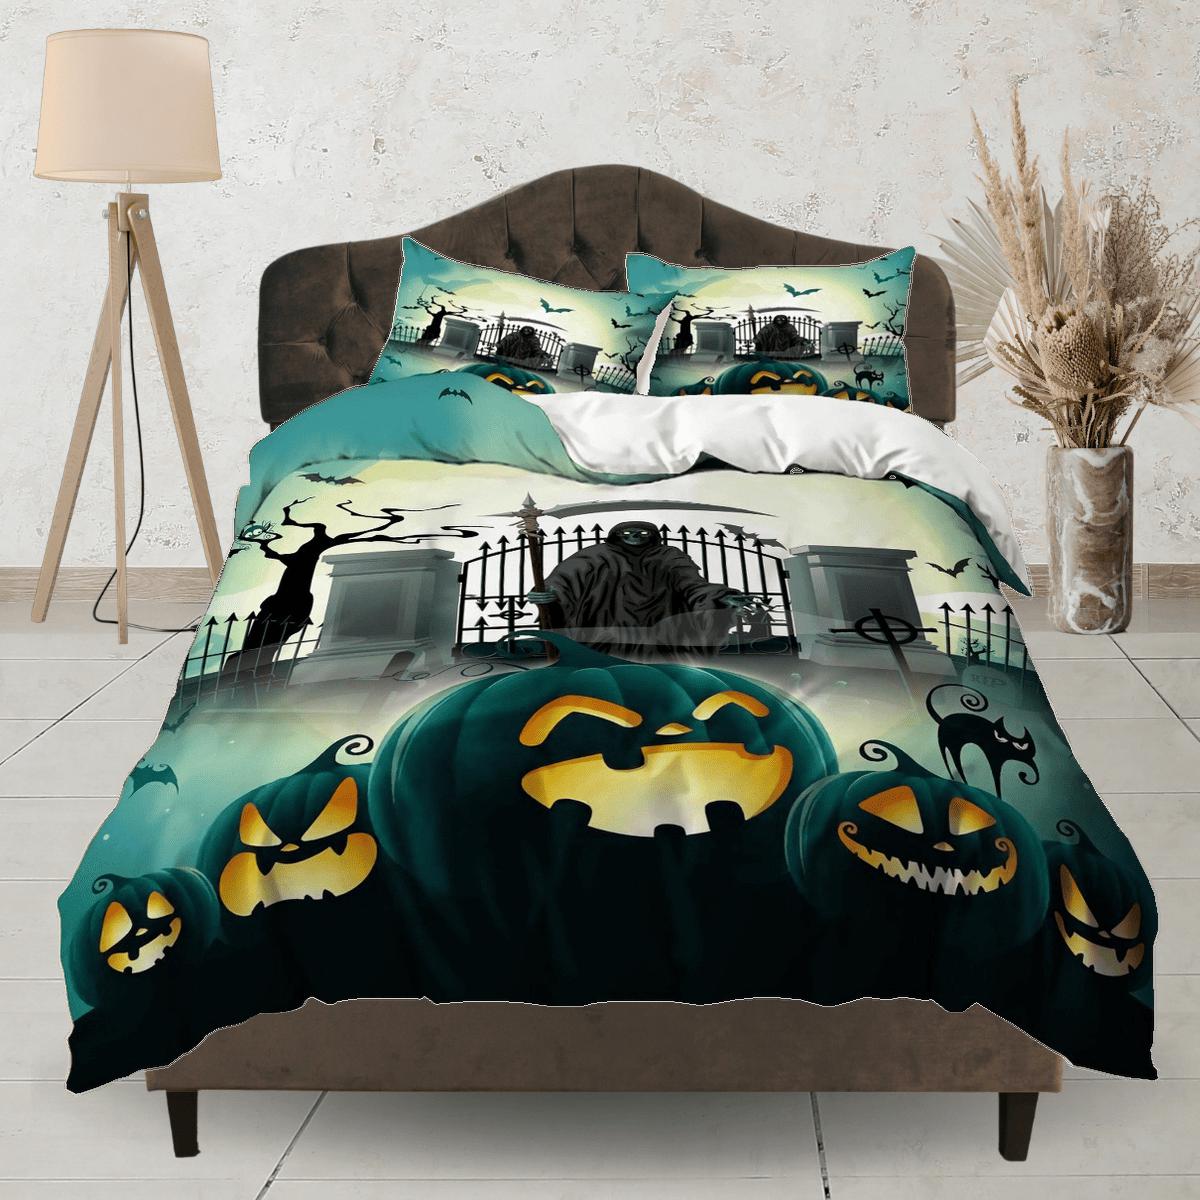 daintyduvet Grim reaper black cat pumpkin halloween bedding & pillowcase, green duvet cover, dorm bedding, goth decor toddler bedding, halloween gift